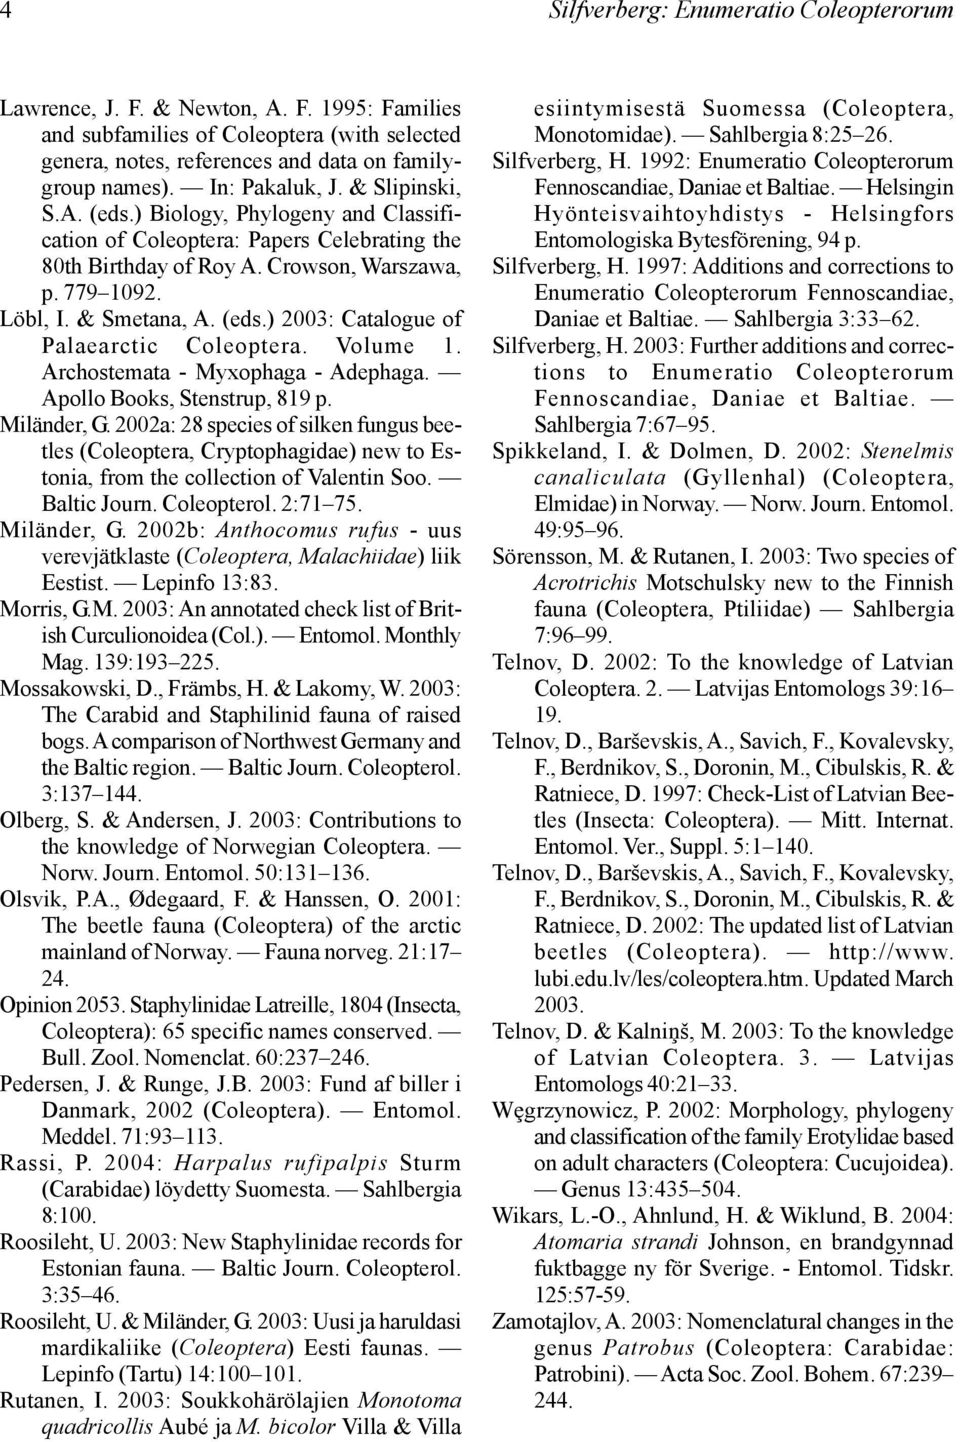 (eds.) 2003: Catalogue of Palaearctic Coleoptera. Volume 1. Archostemata - Myxophaga - Adephaga. Apollo Books, Stenstrup, 819 p. Miländer, G.